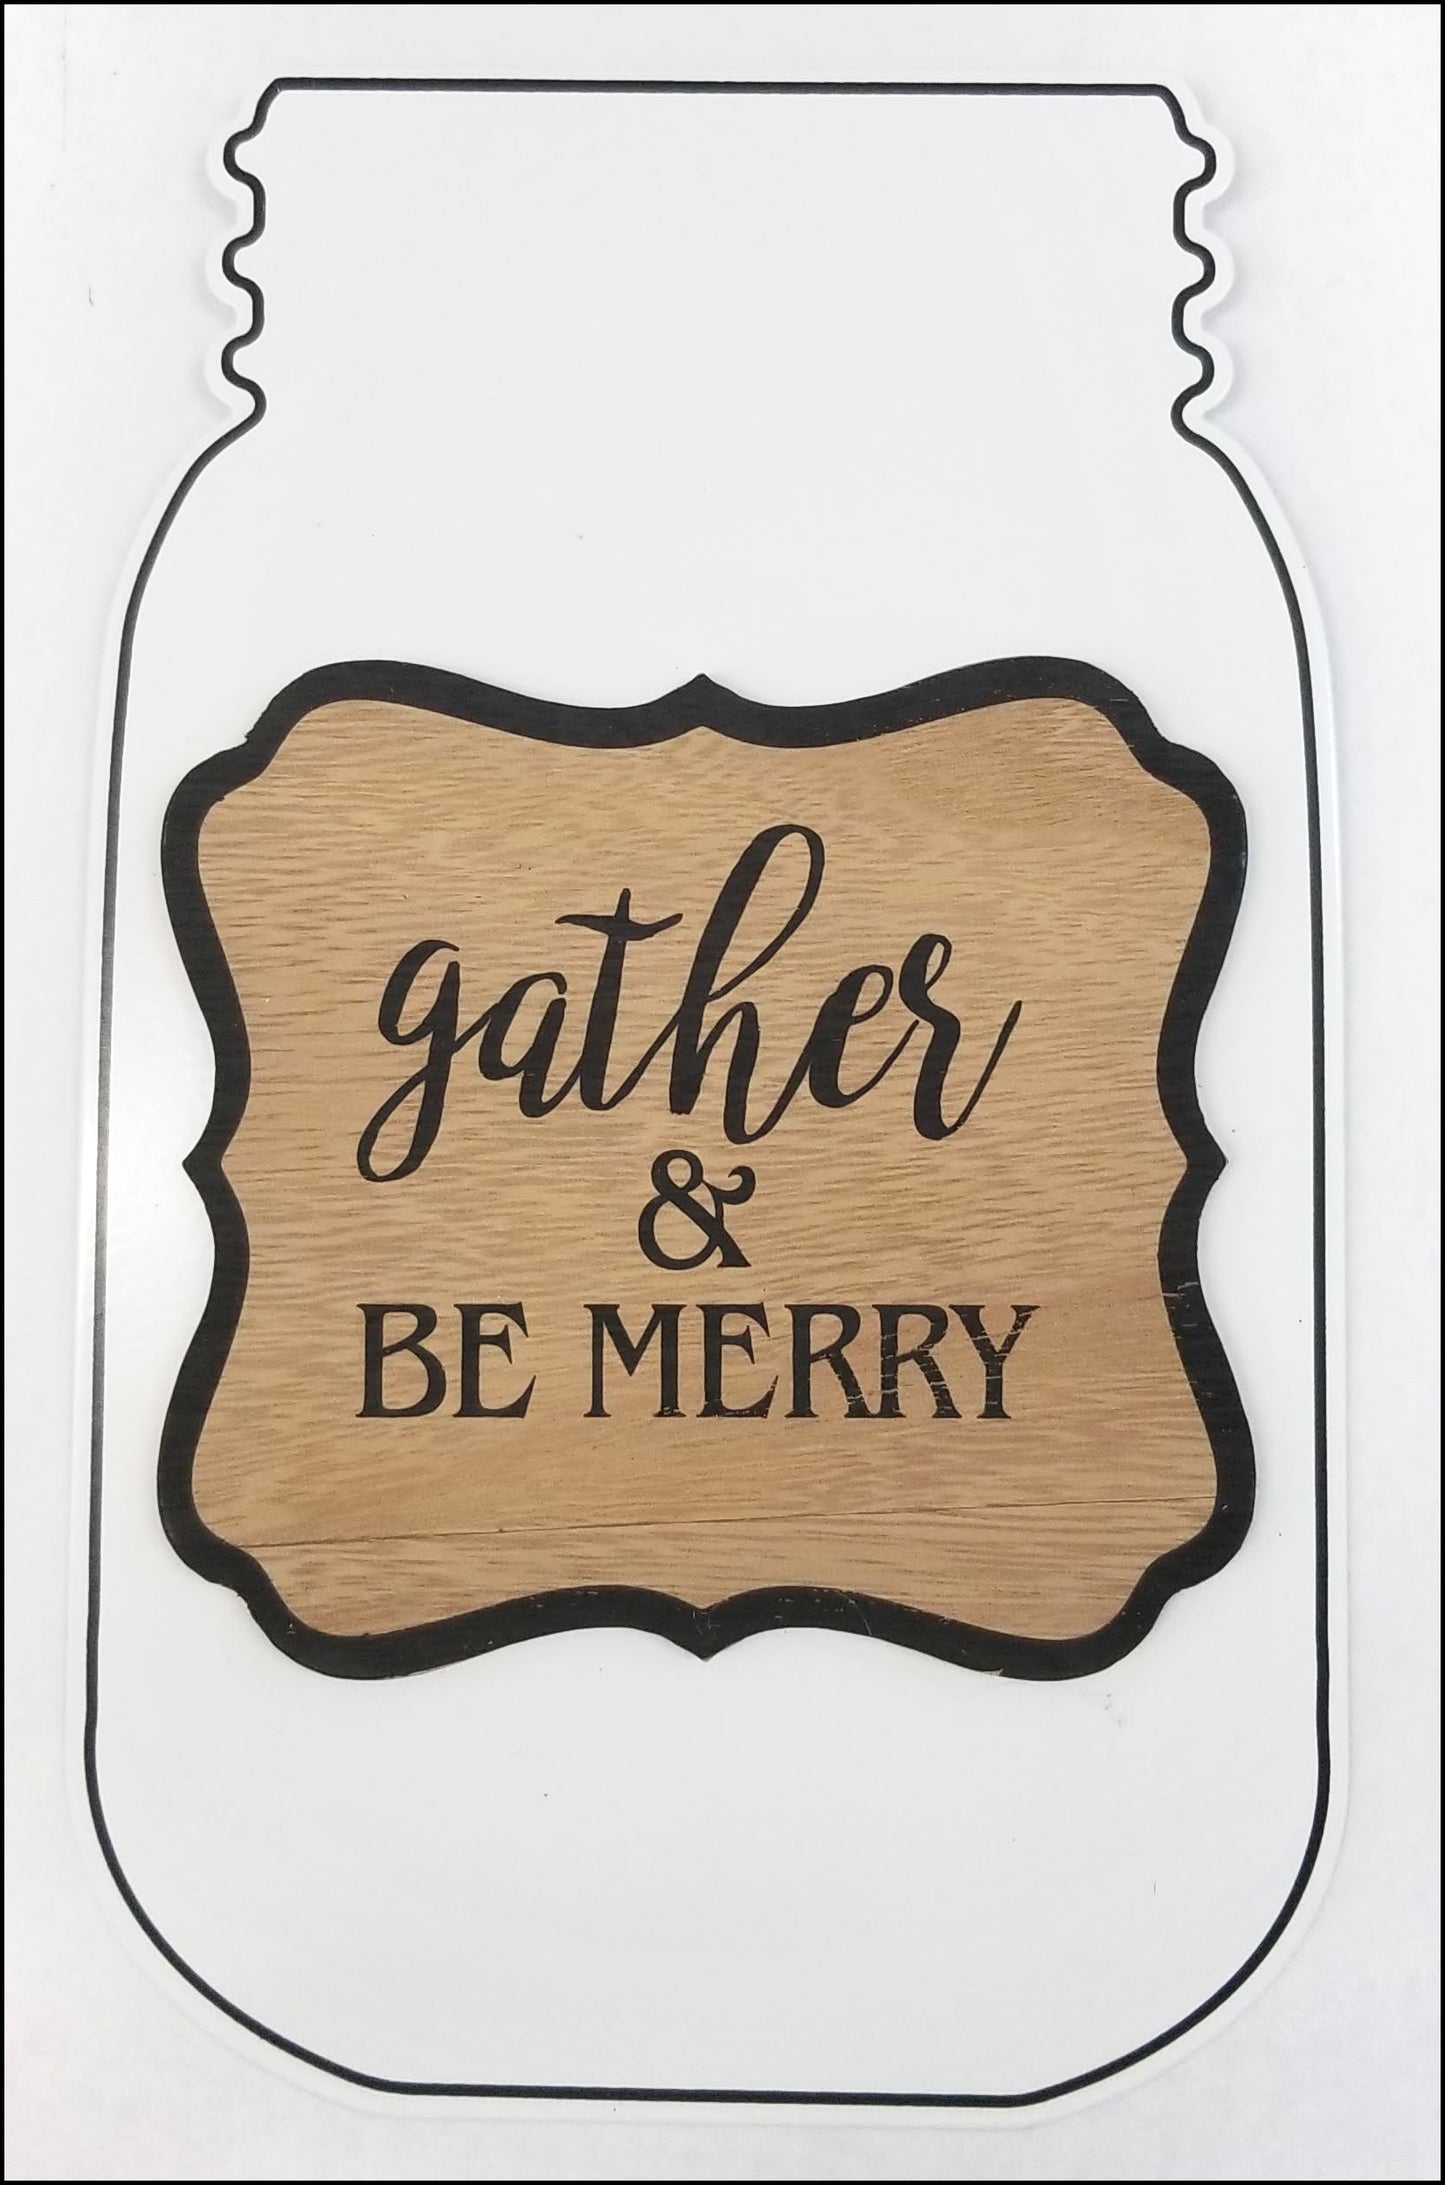 Gather & Be Merry Holiday DIY Wreath Kit - Designer DIY